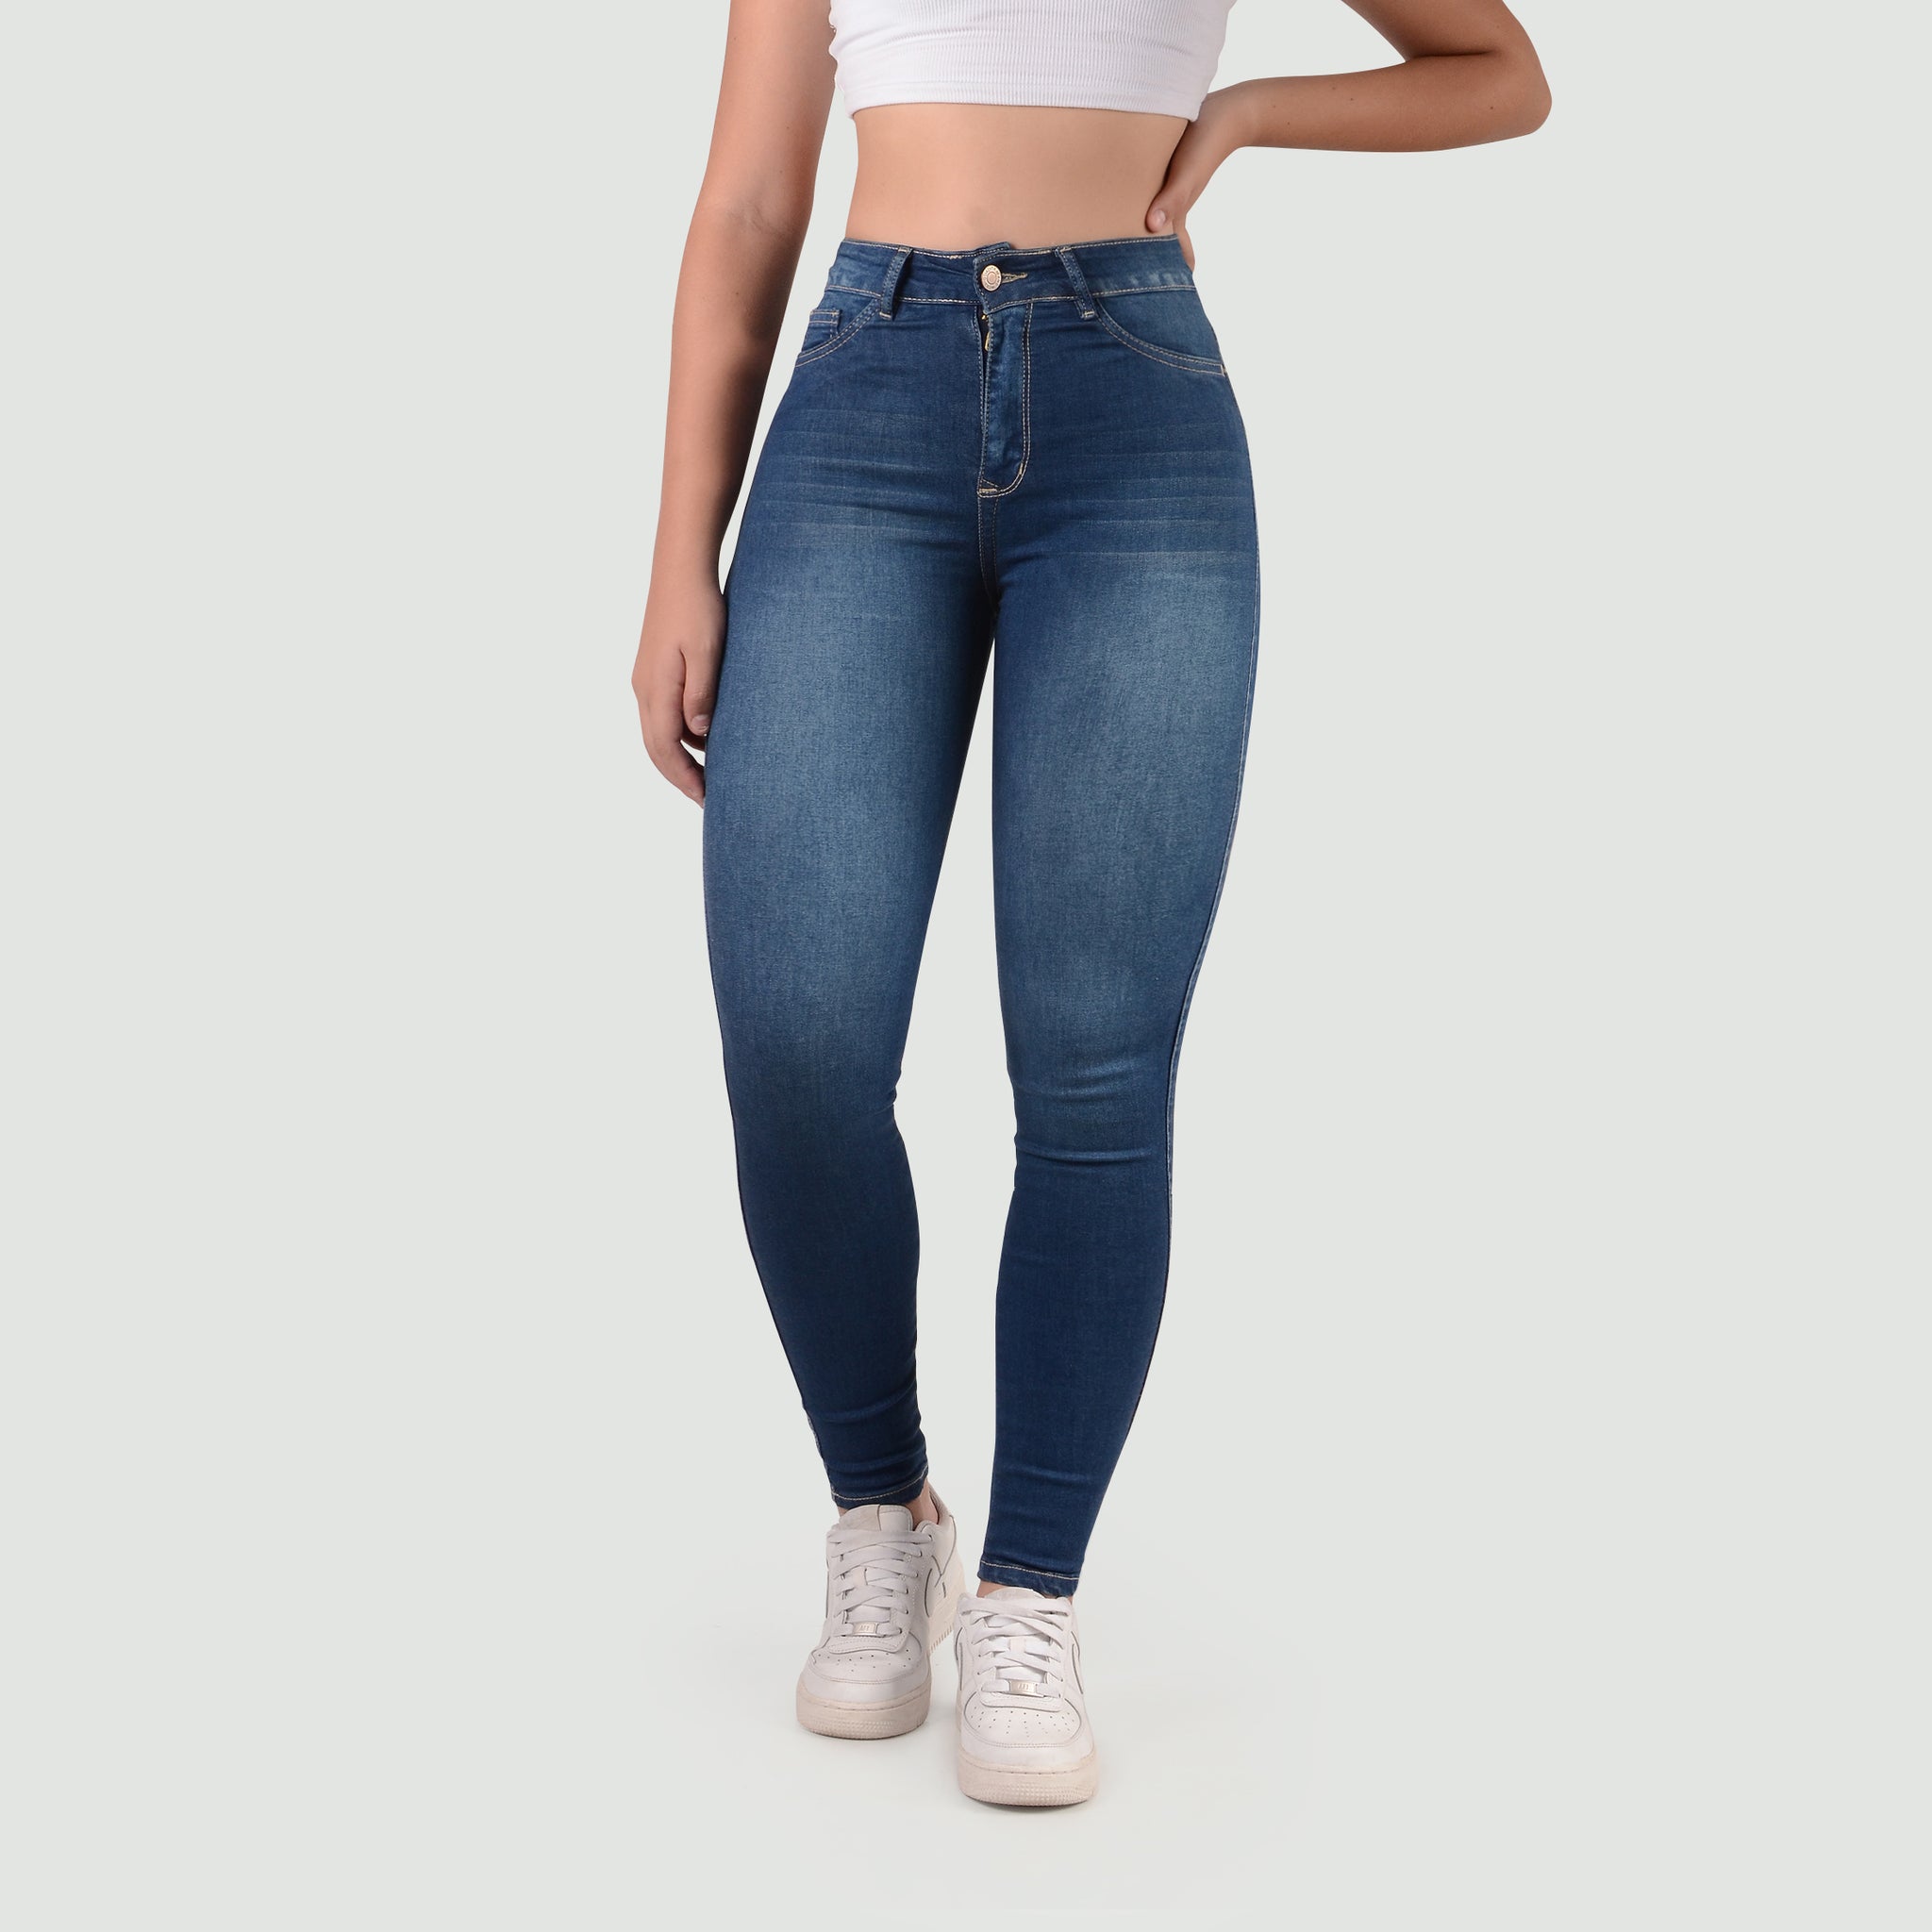 Jeans Mujer Tiro Alto 7074 – SEGUEN JEANS